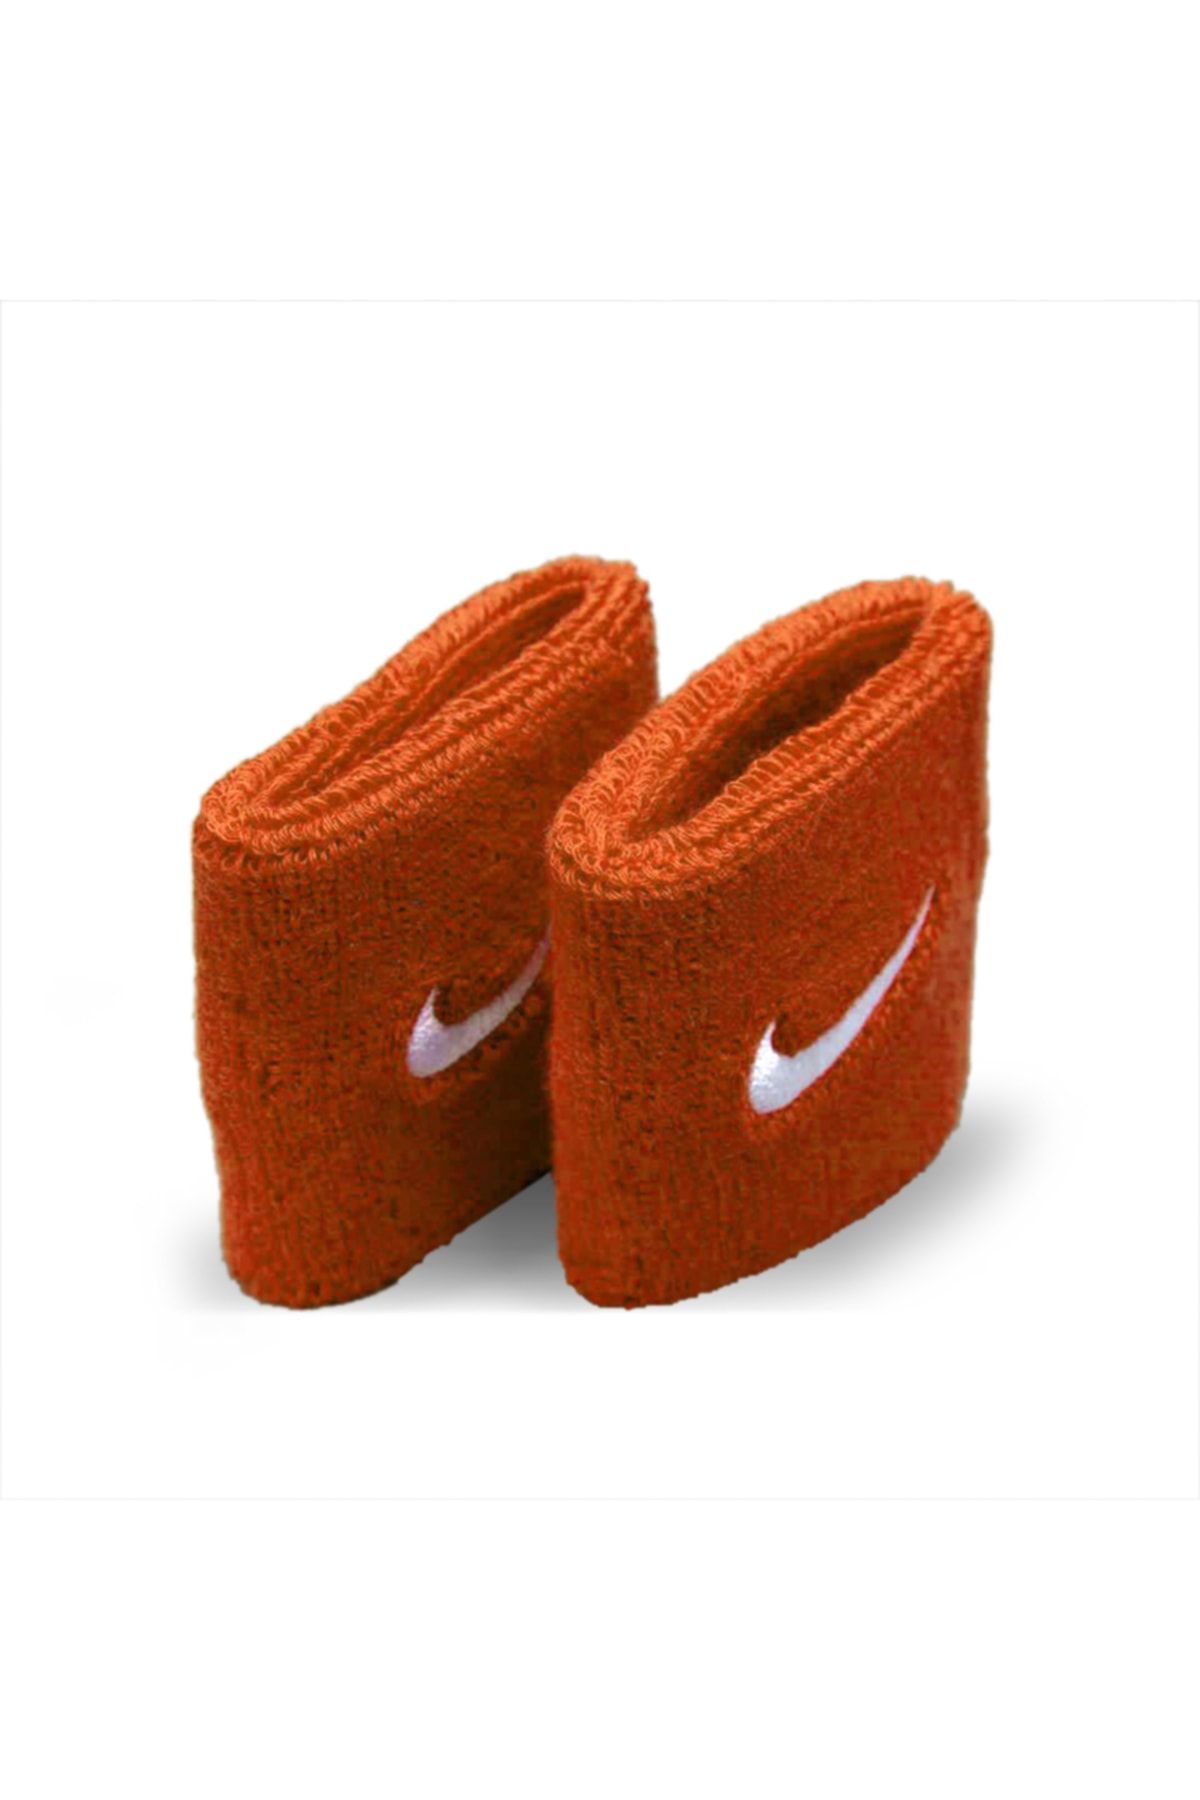 Nike Swoosh Bandeaux Absorbants Sport Serre-Poignet 2er Paquet Bracelet  ORANGE